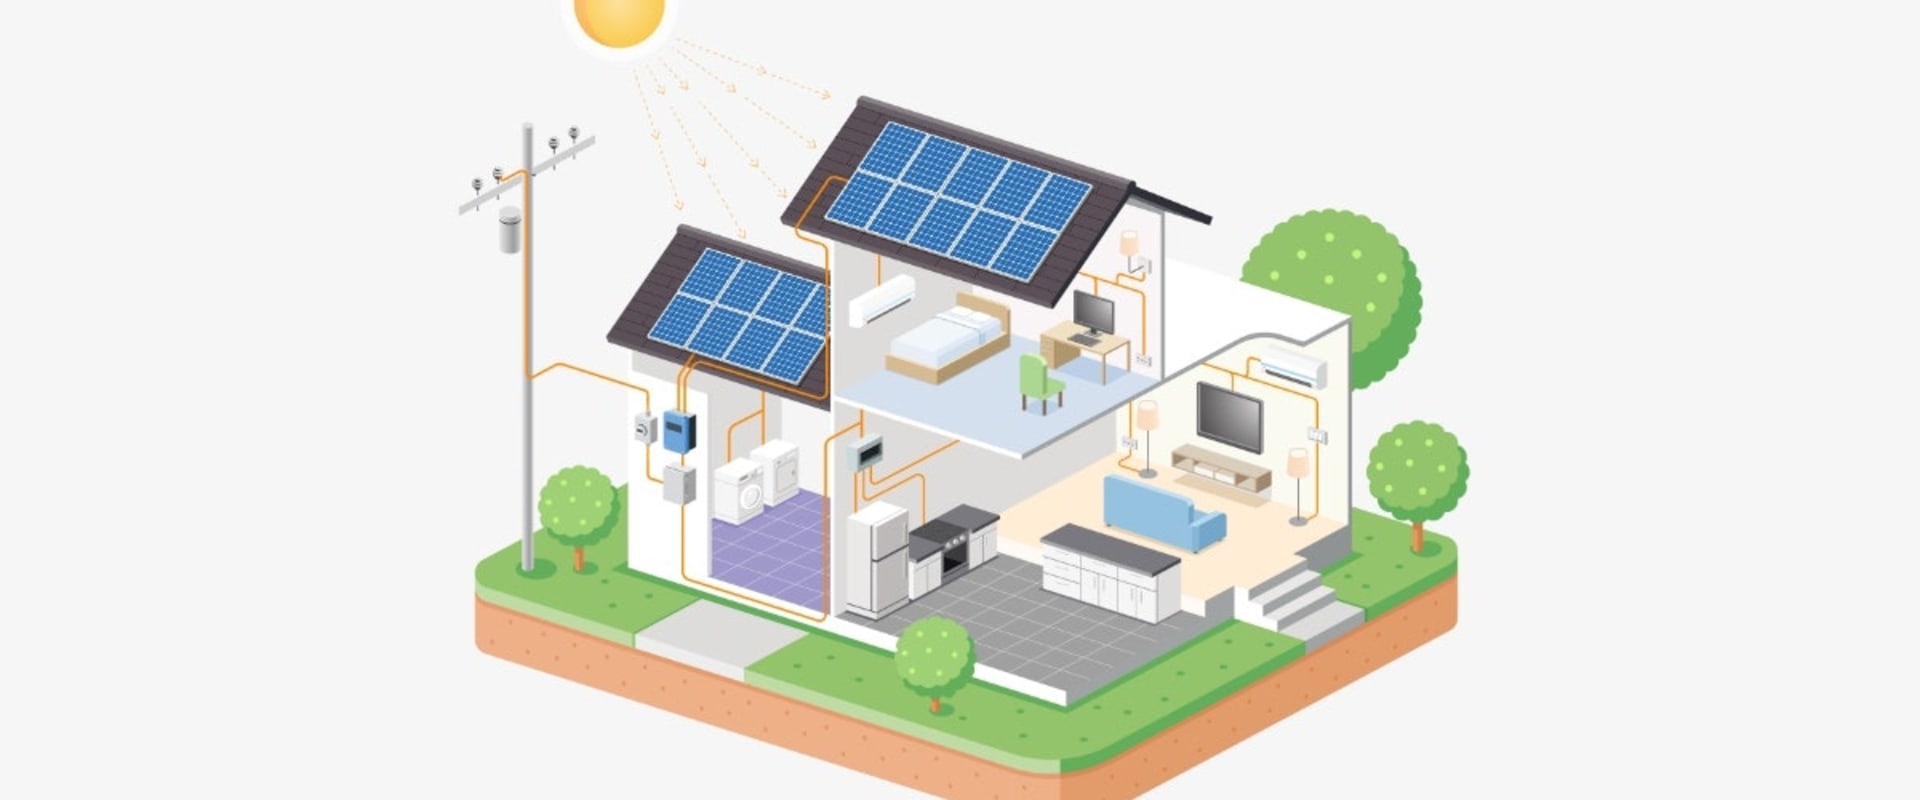 When does solar power work?